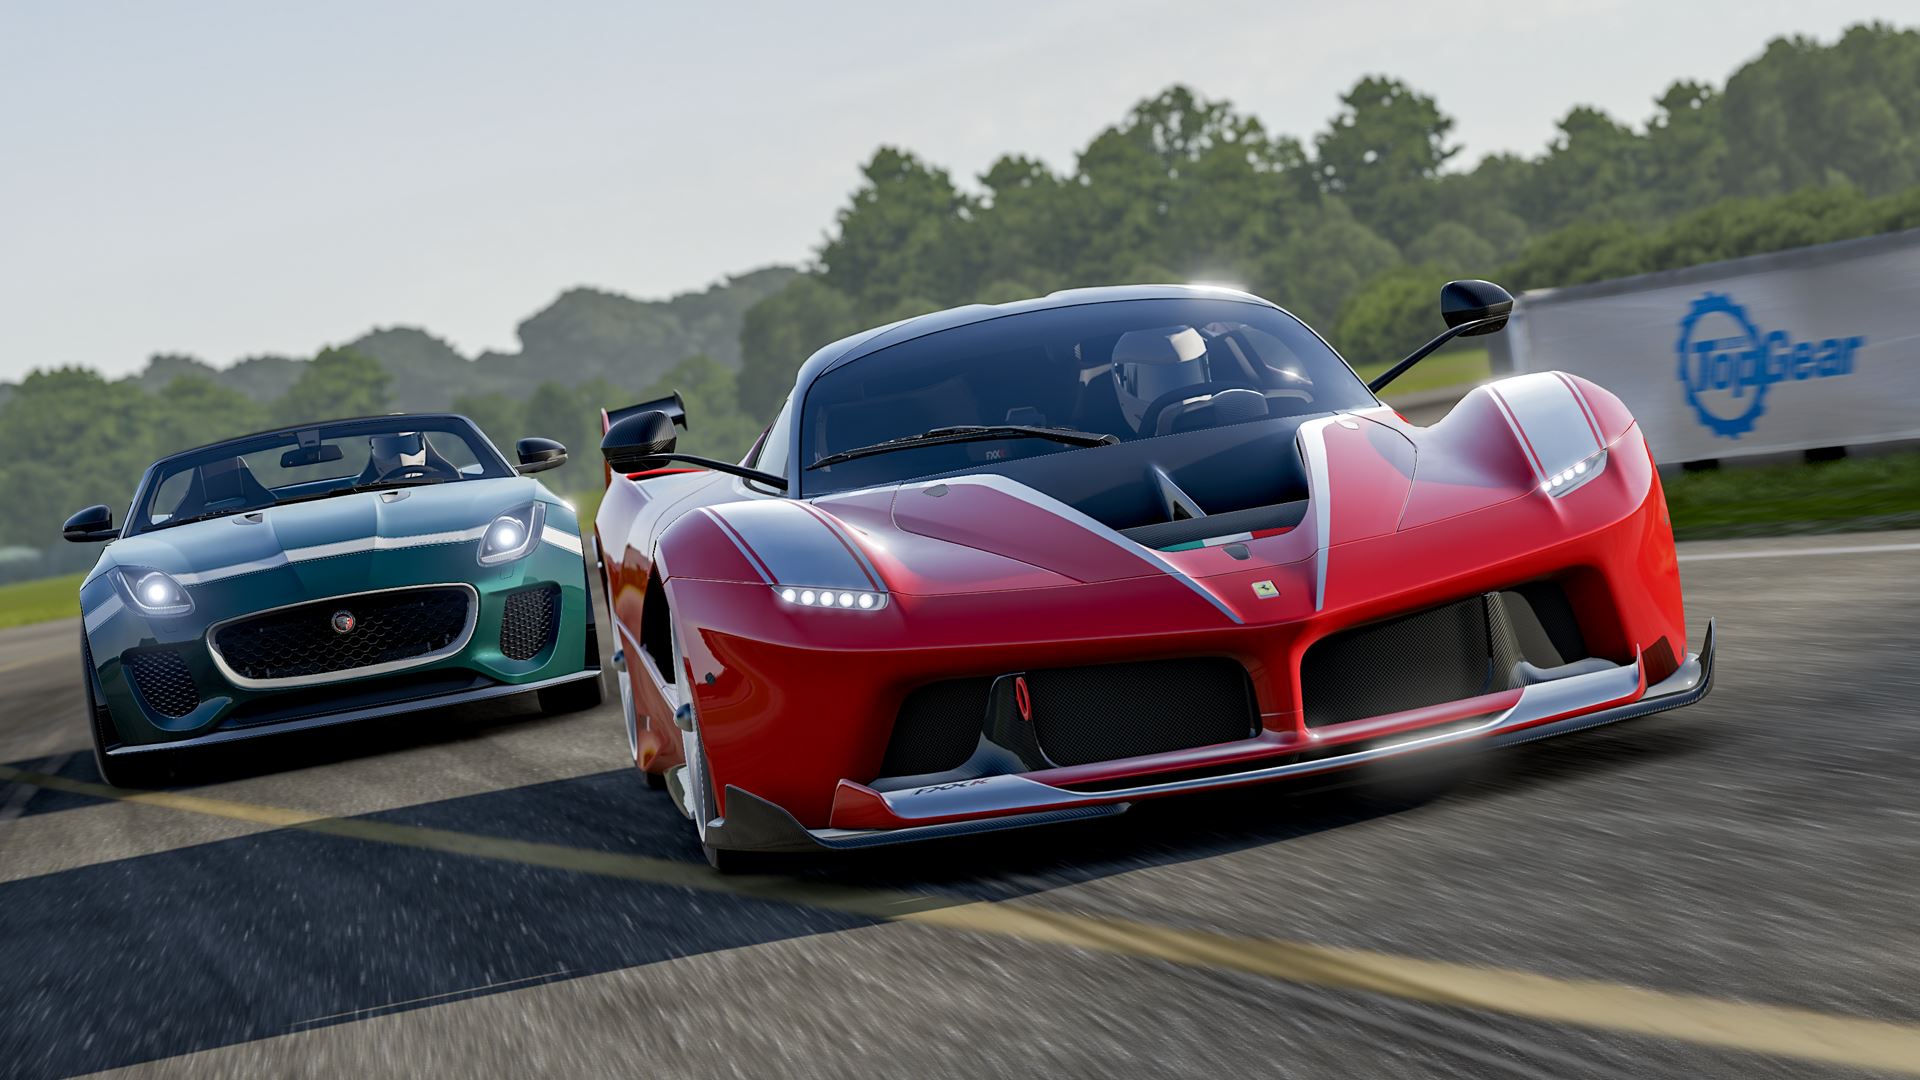 Forza Motorsport 6 Top Gear car pack released - Bsimracing